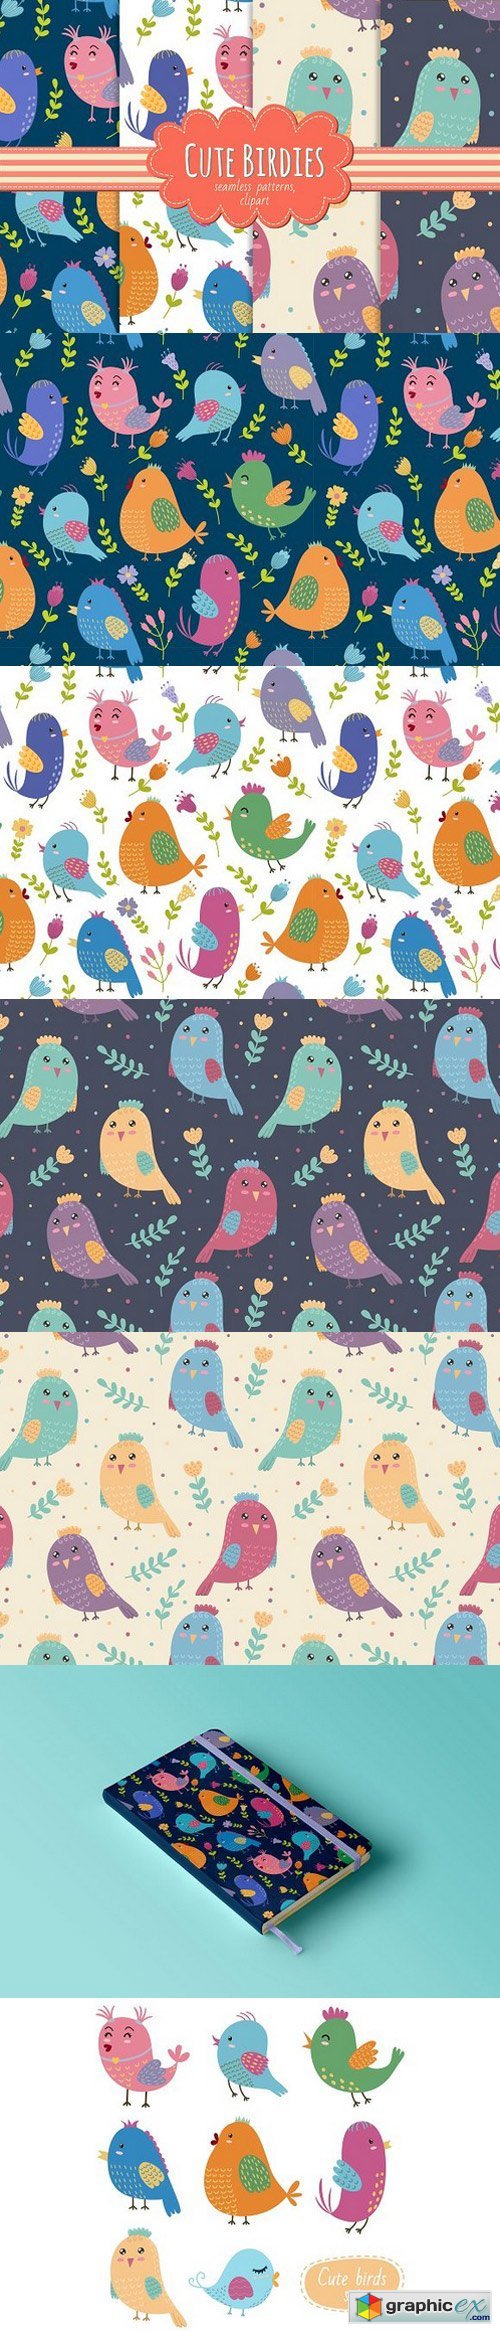 Cute Birdies: patterns&clipart